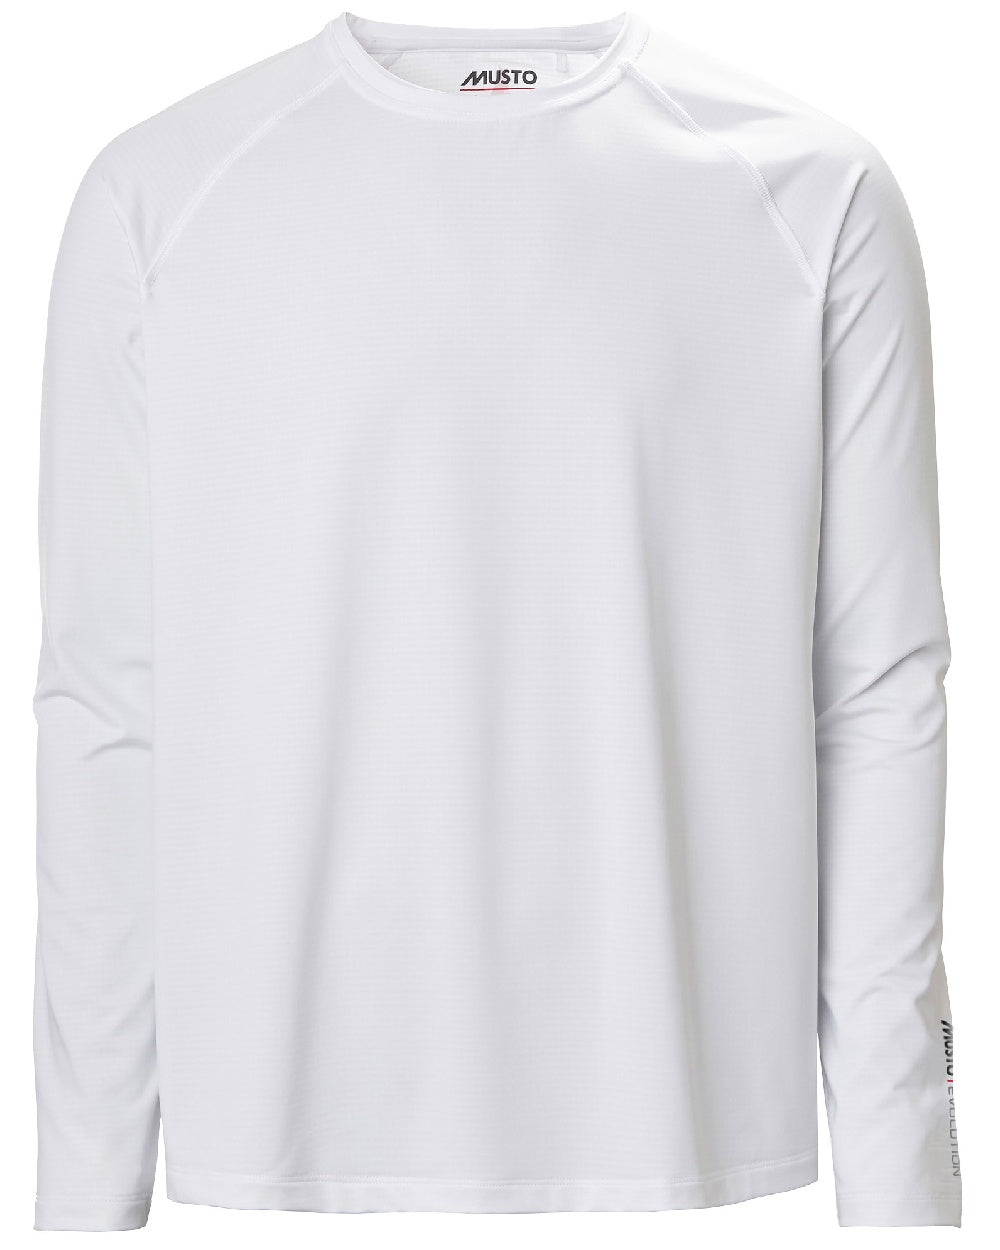 Musto Mens Sunblock Long Sleeve T-Shirt 2.0 in white 